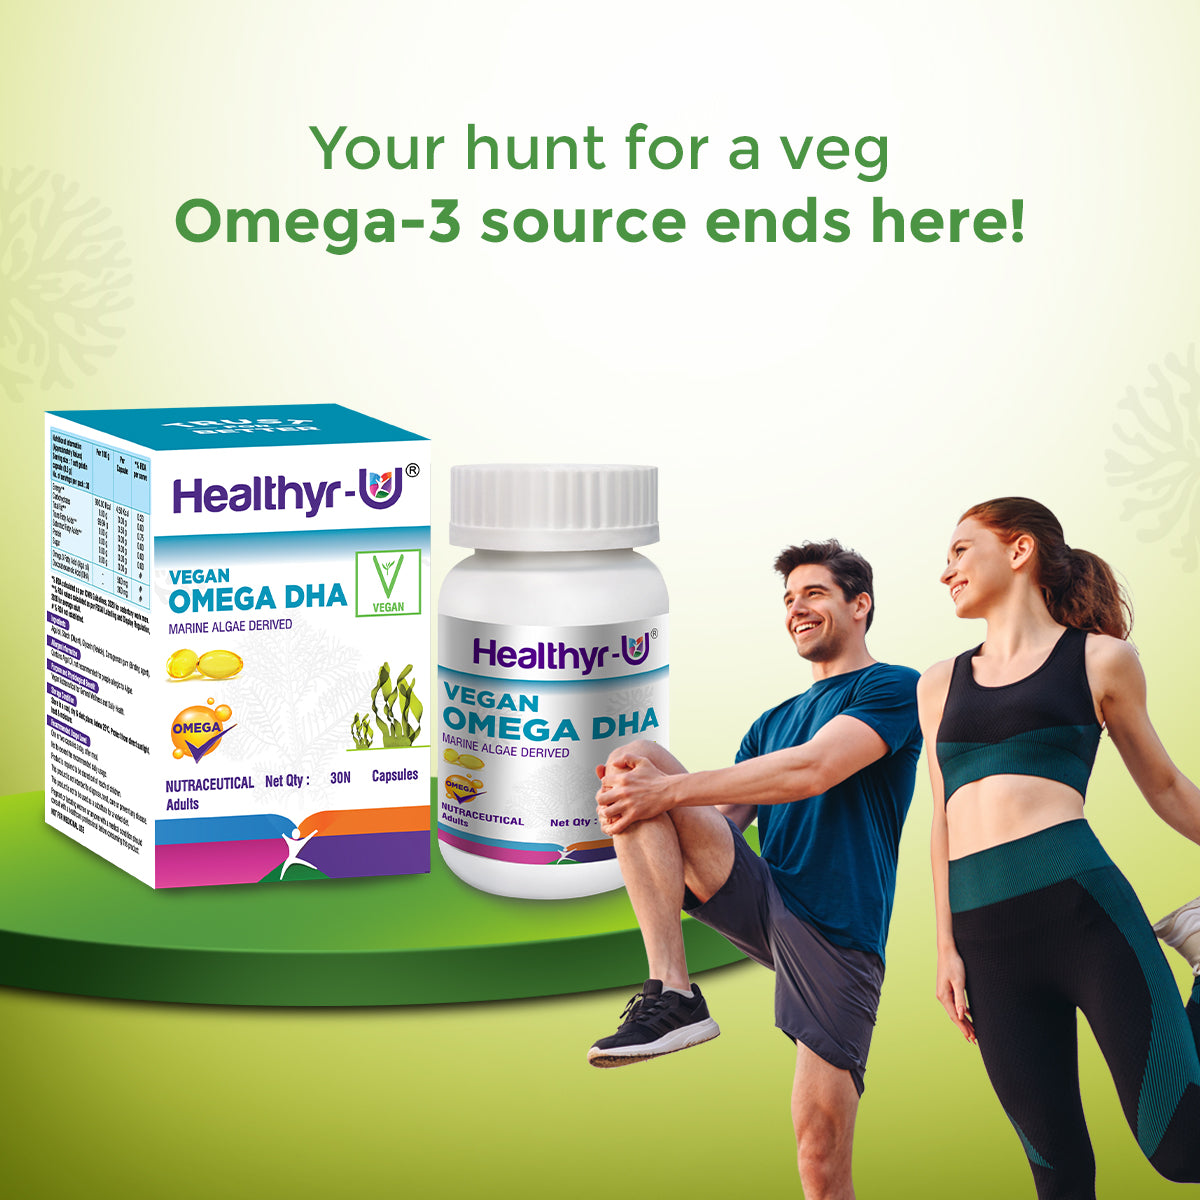 Vegan-Omega-DHA-Healthyr-U-Omega-3